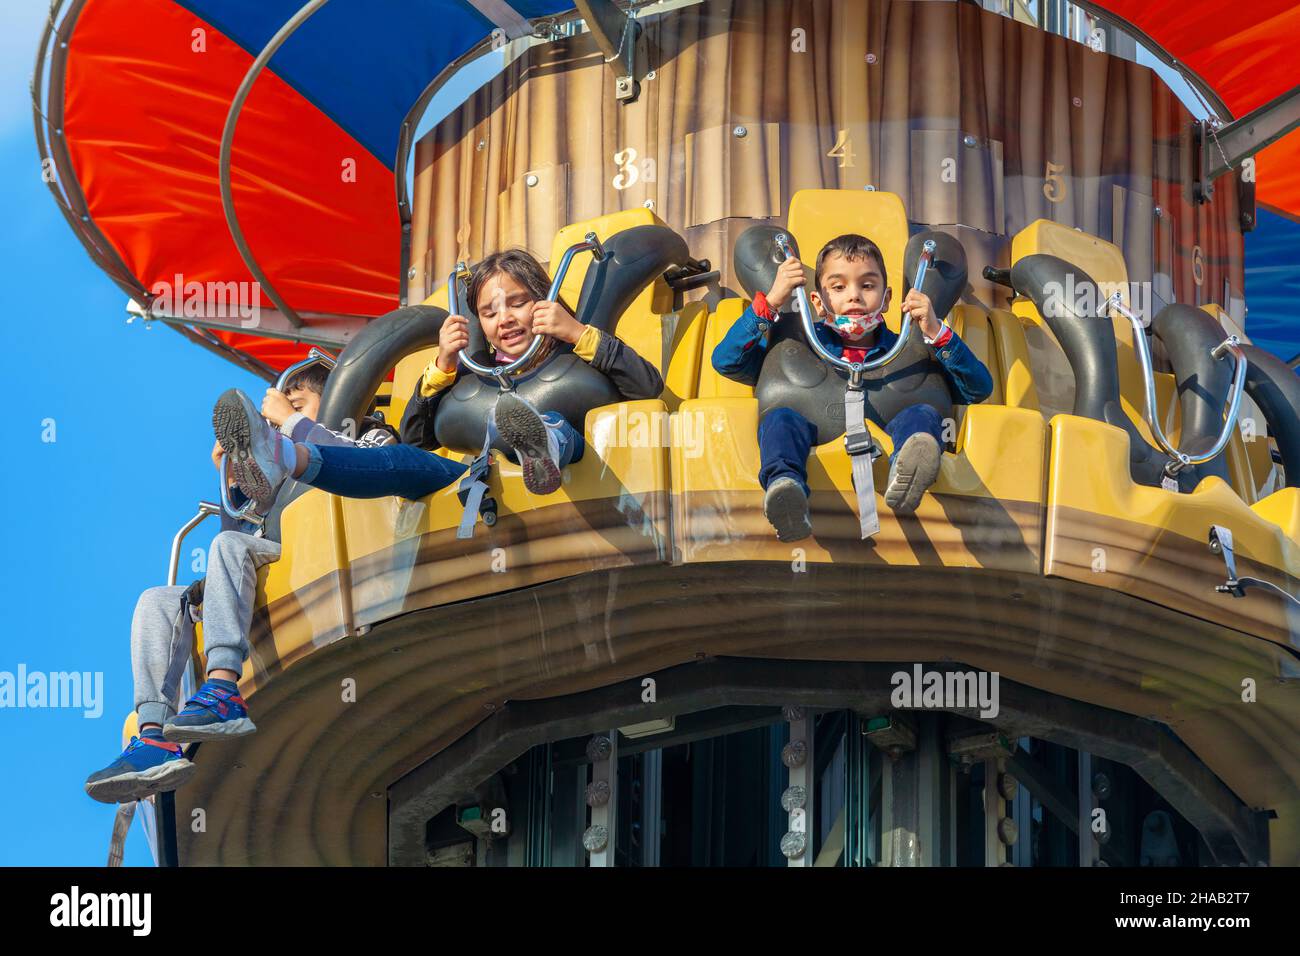 Ankara-Turkey:October 3, 2021: Children having fun at luna park | Genclik Parki in Ankara. People with high adneraline entertaining at amusement park. Stock Photo